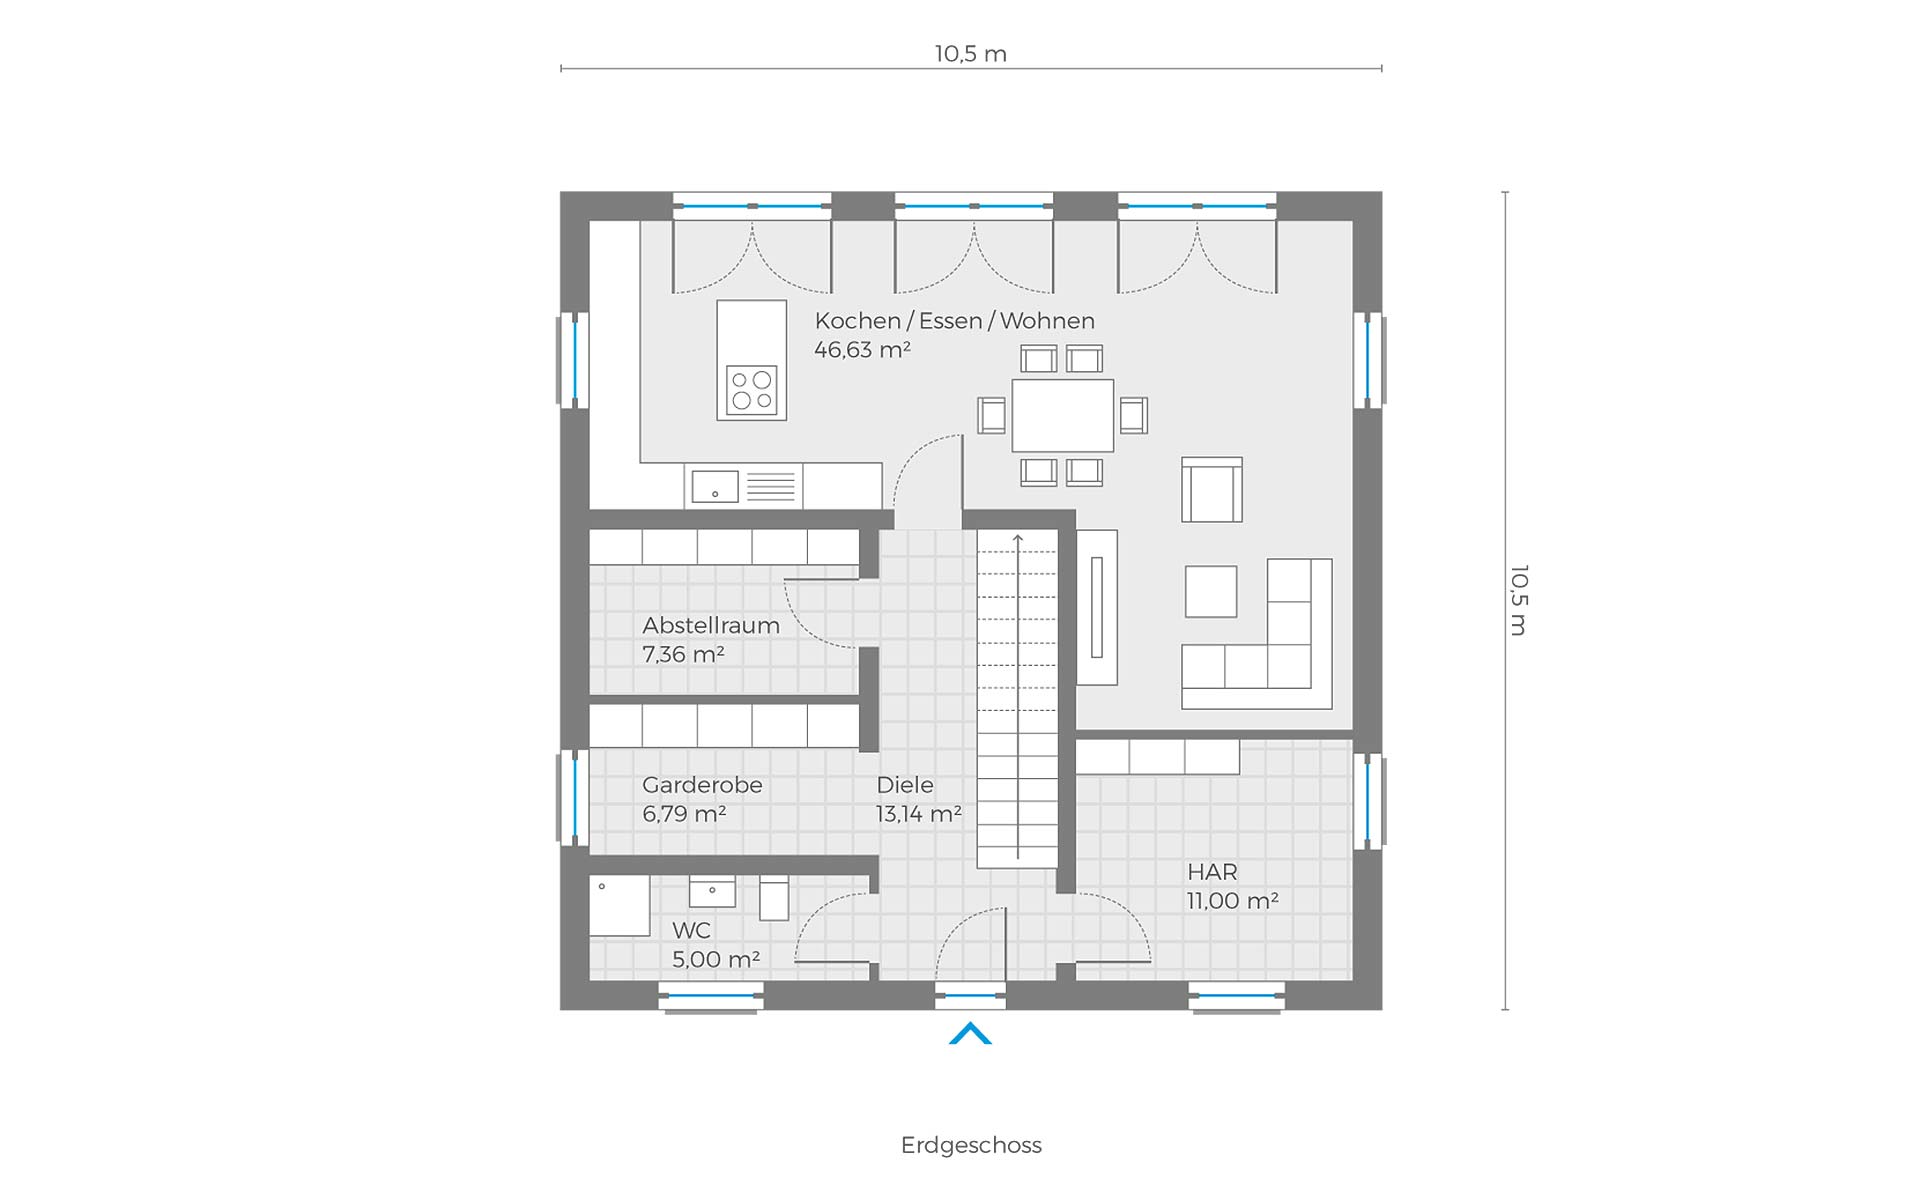 Erdgeschoss Bacchus von CReative Bauplanung GmbH